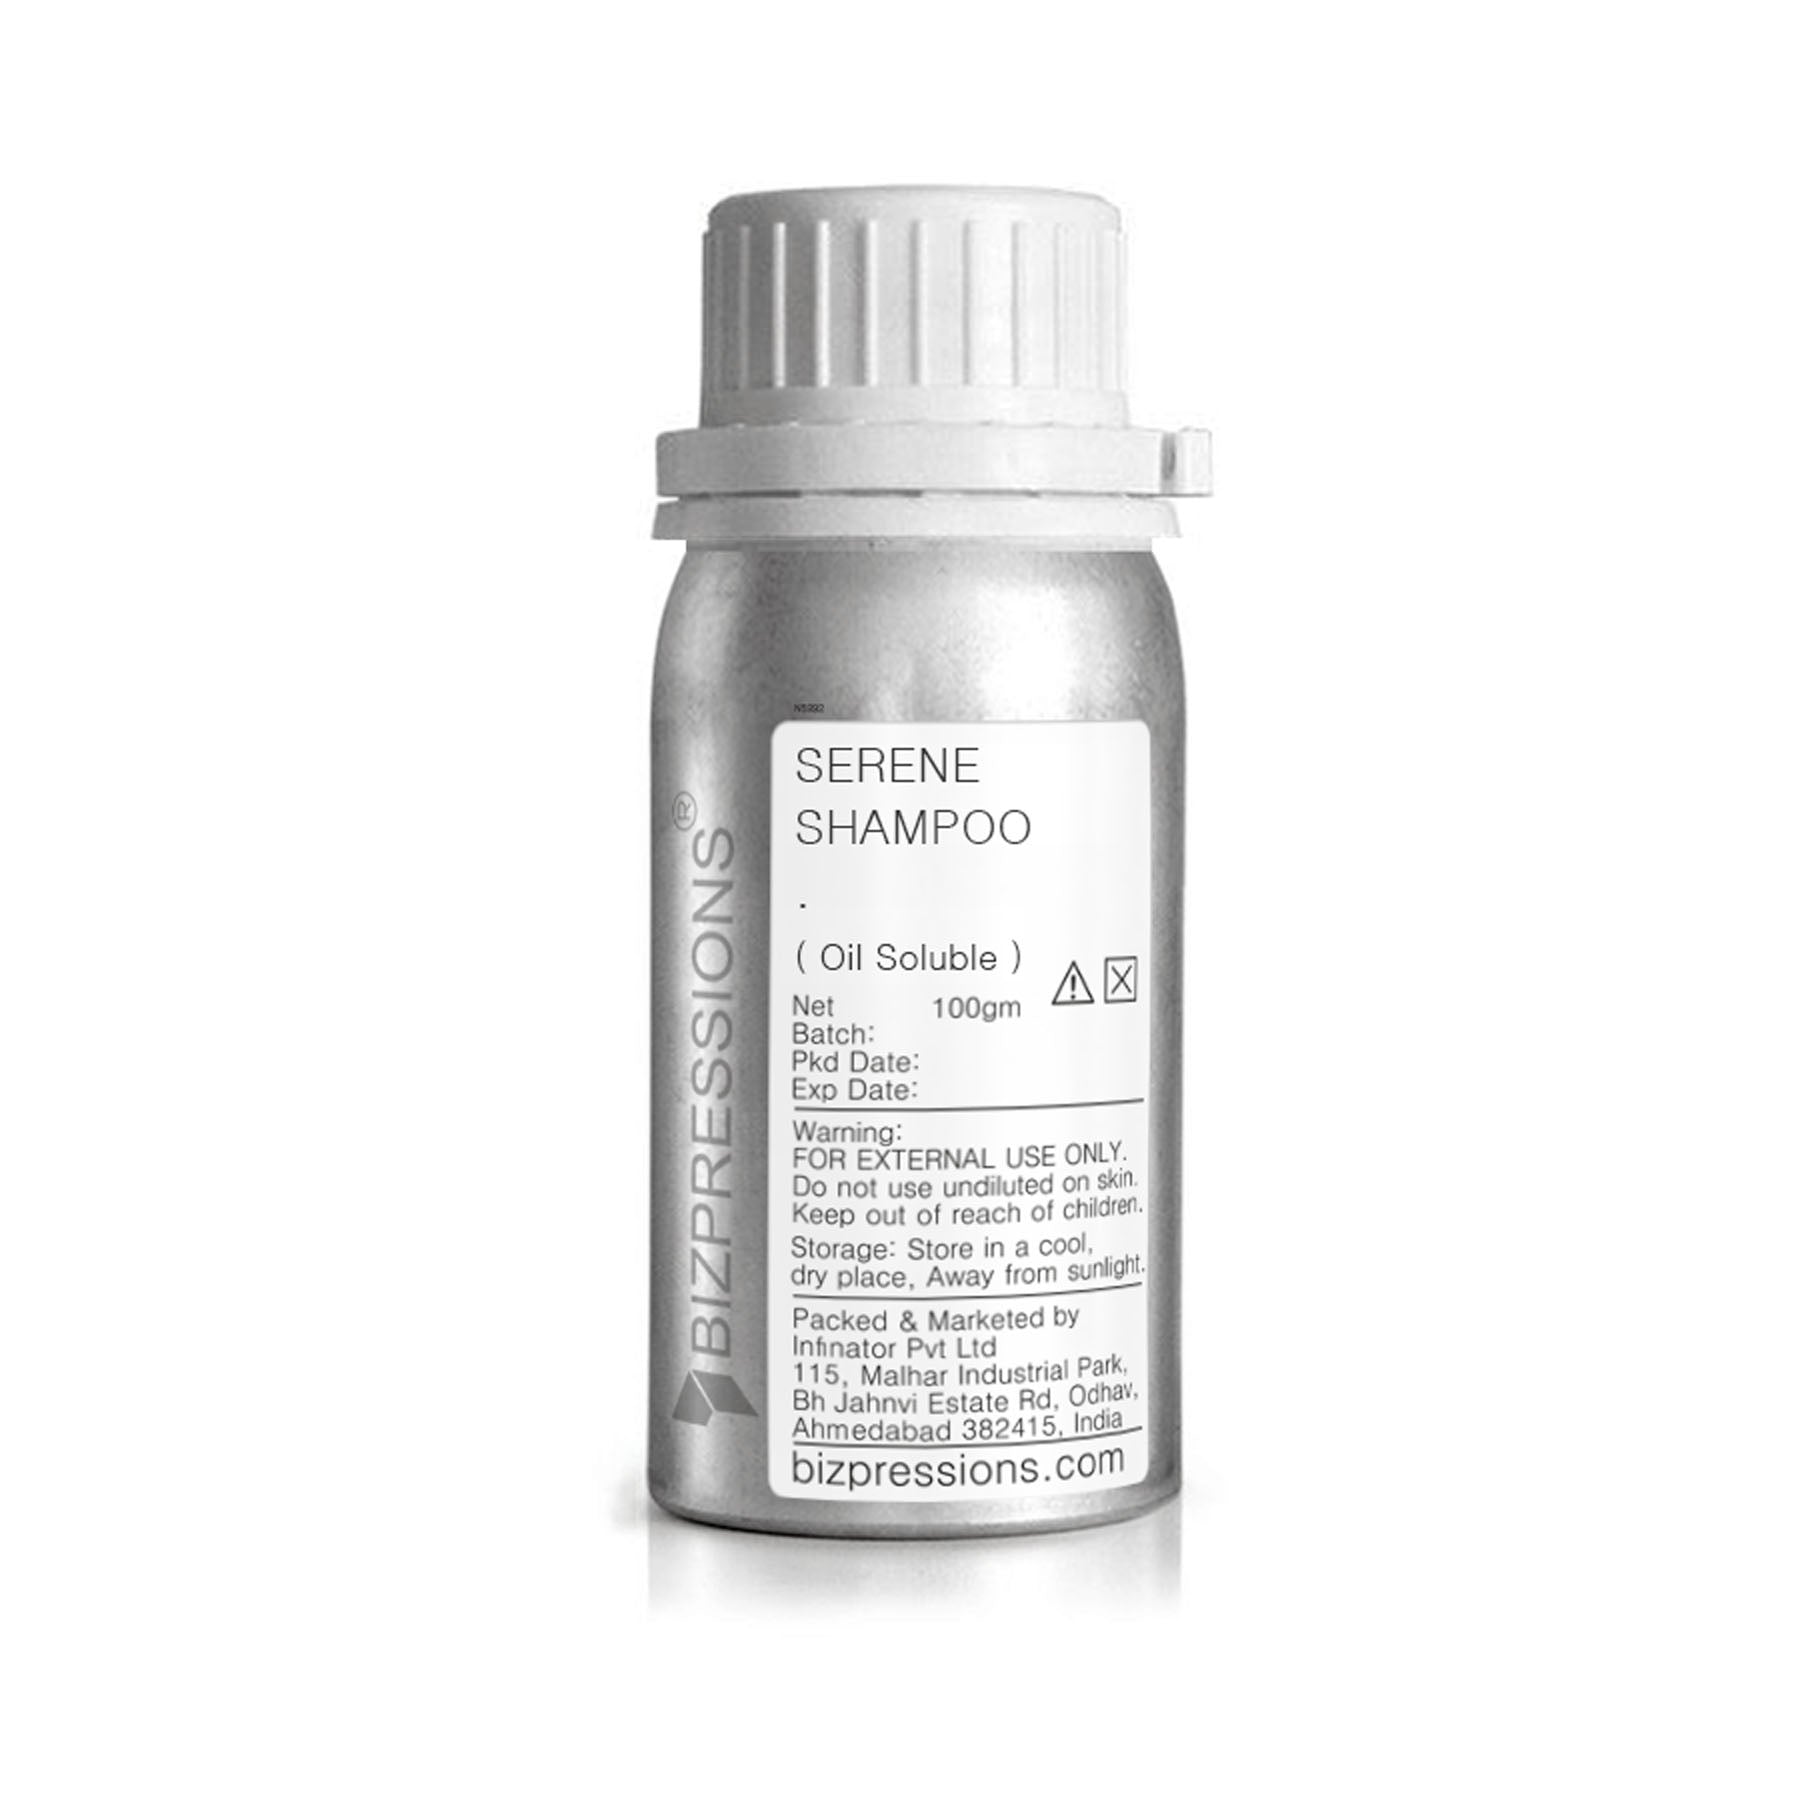 SERENE SHAMPOO - Fragrance ( Oil Soluble ) - 100 gm